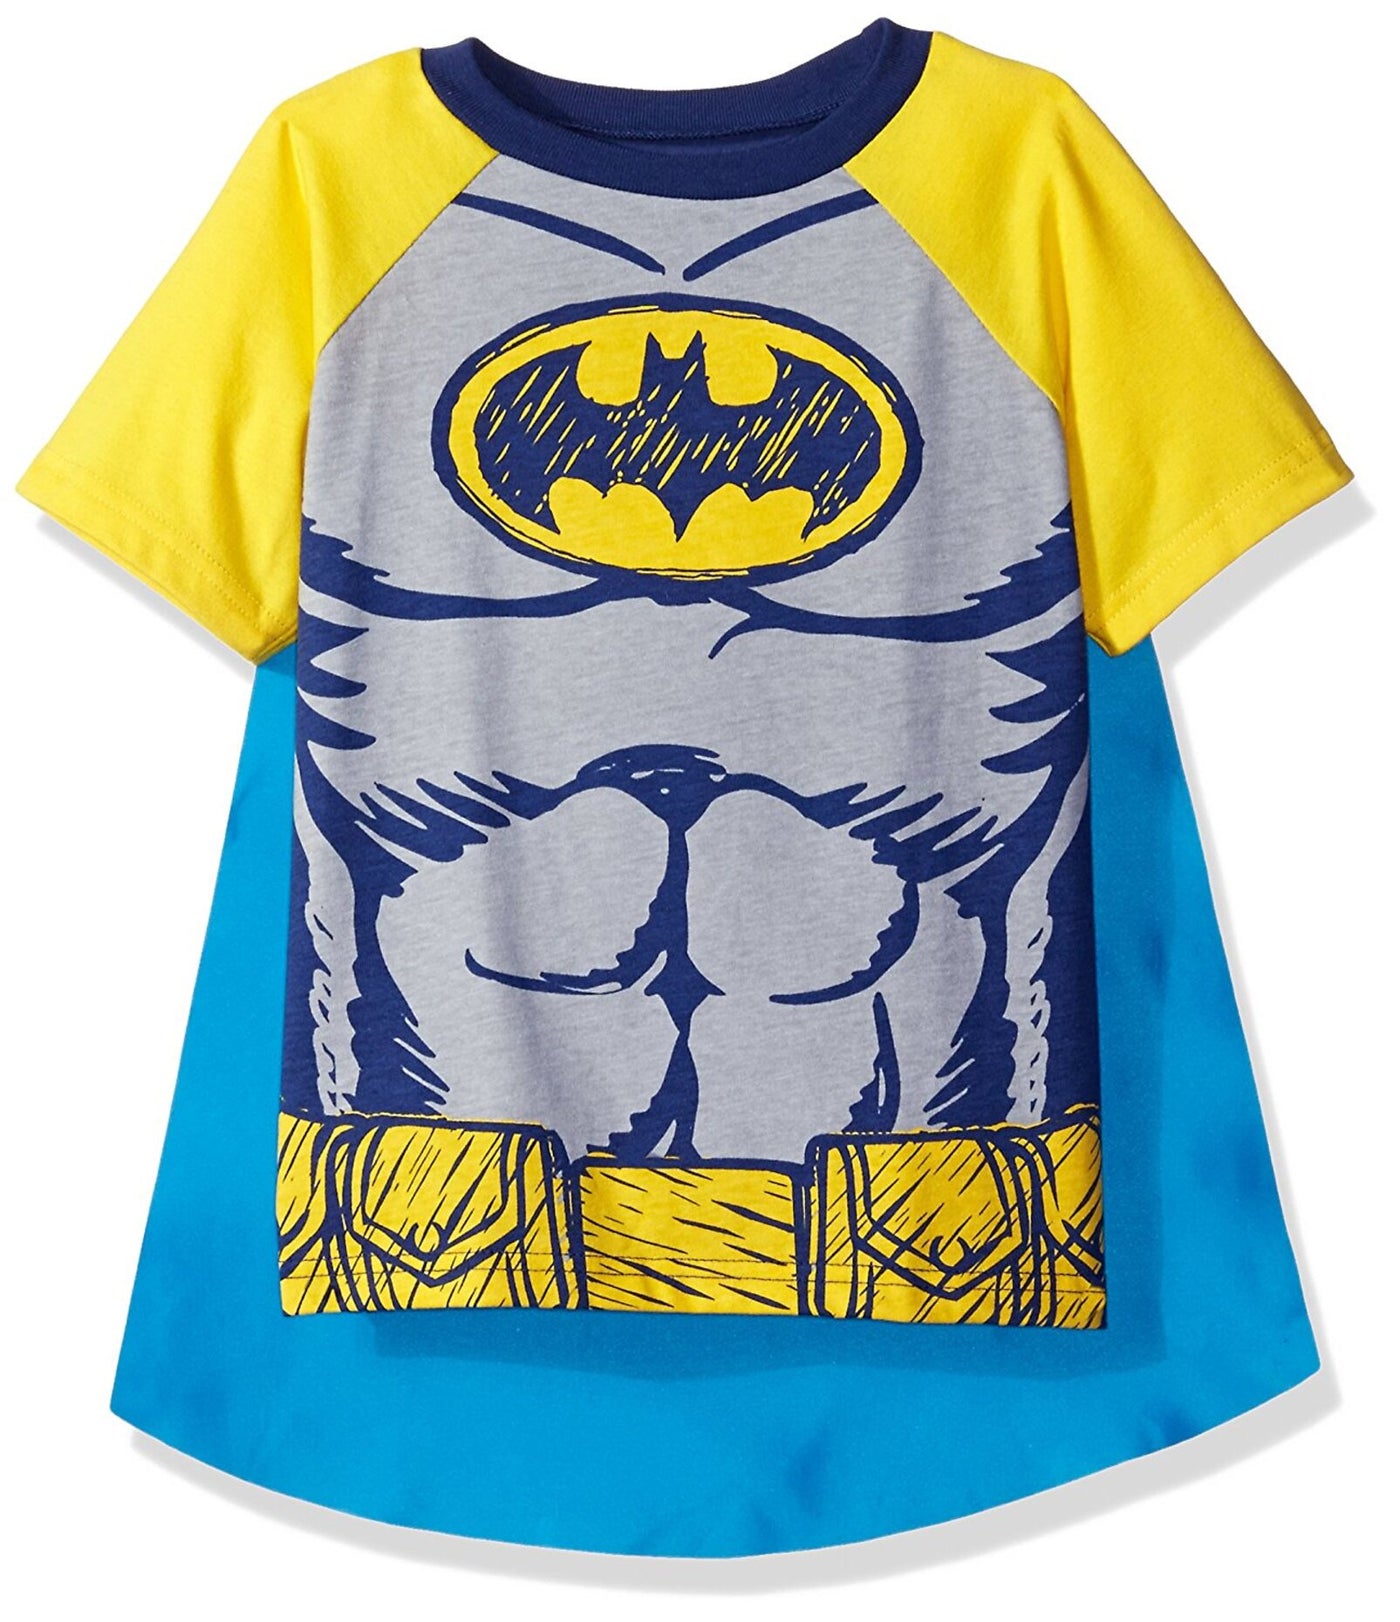 Warner Bros. Justice League Batman Cosplay T-Shirt and Cape